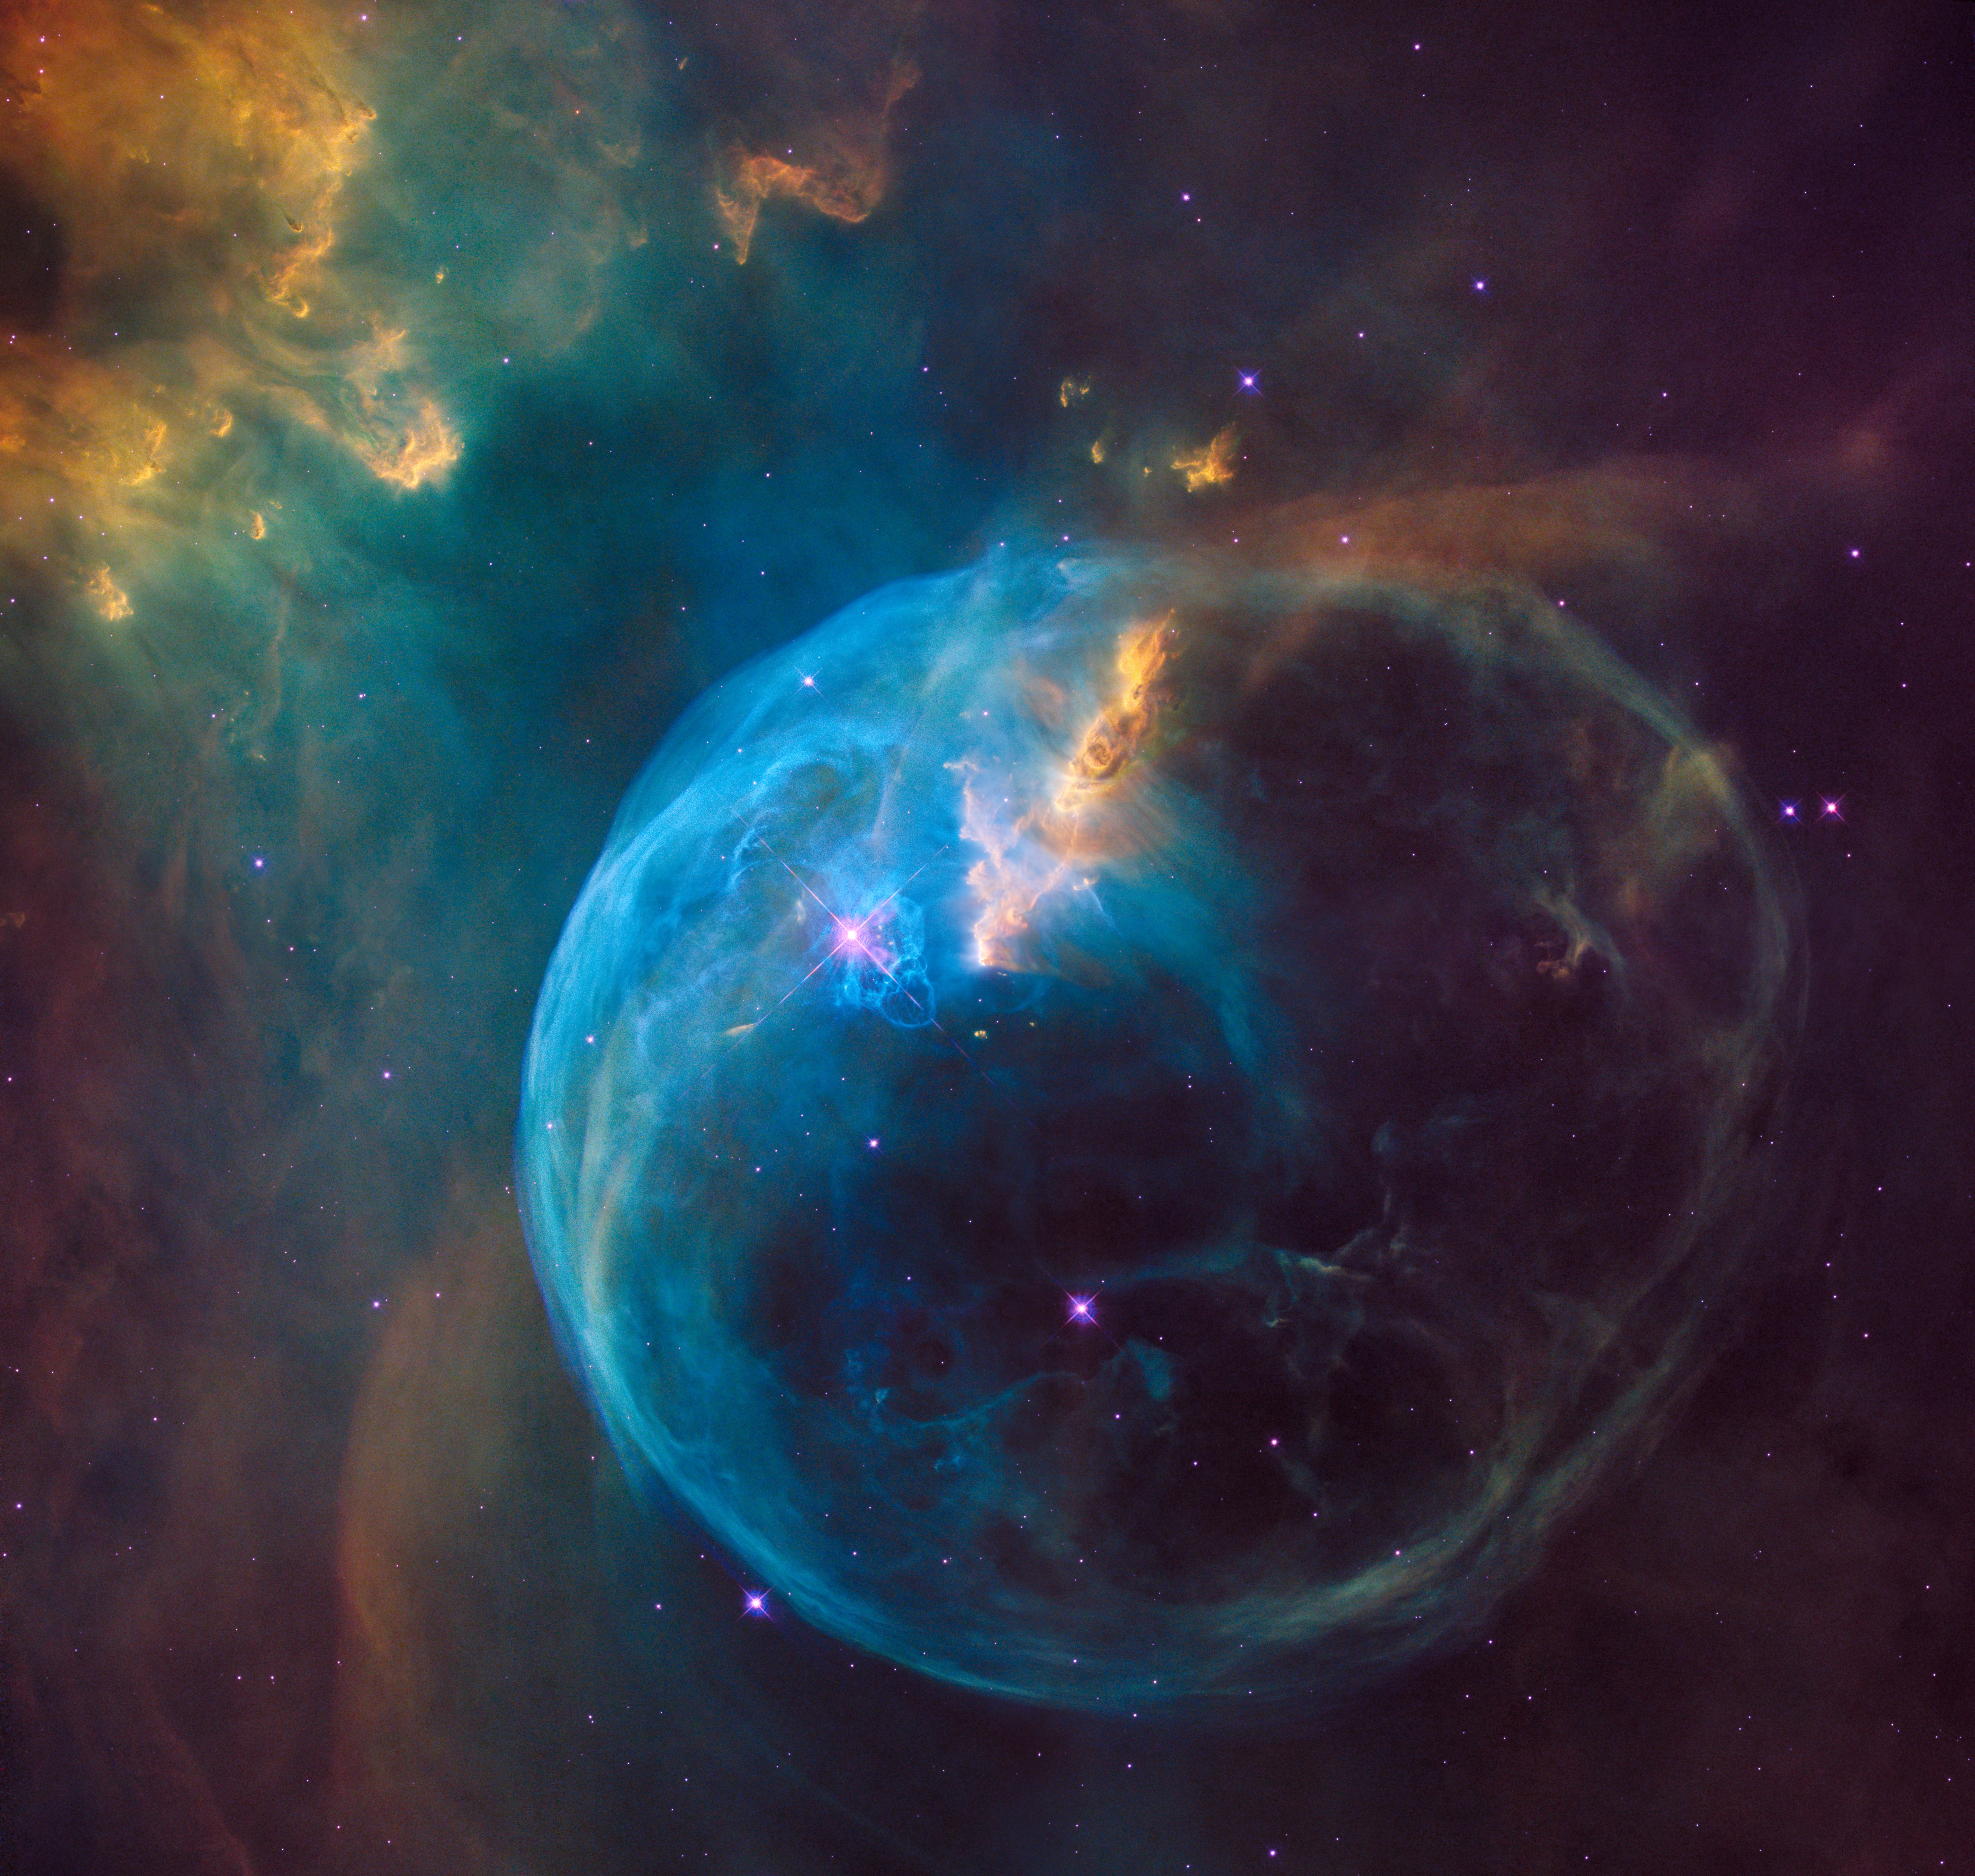 HD wallpaper, Interstellar, Hubble Space Telescope, Cassiopeia Constellation, Ngc 7635, 8K, 5K, Nasa, Bubble Nebula